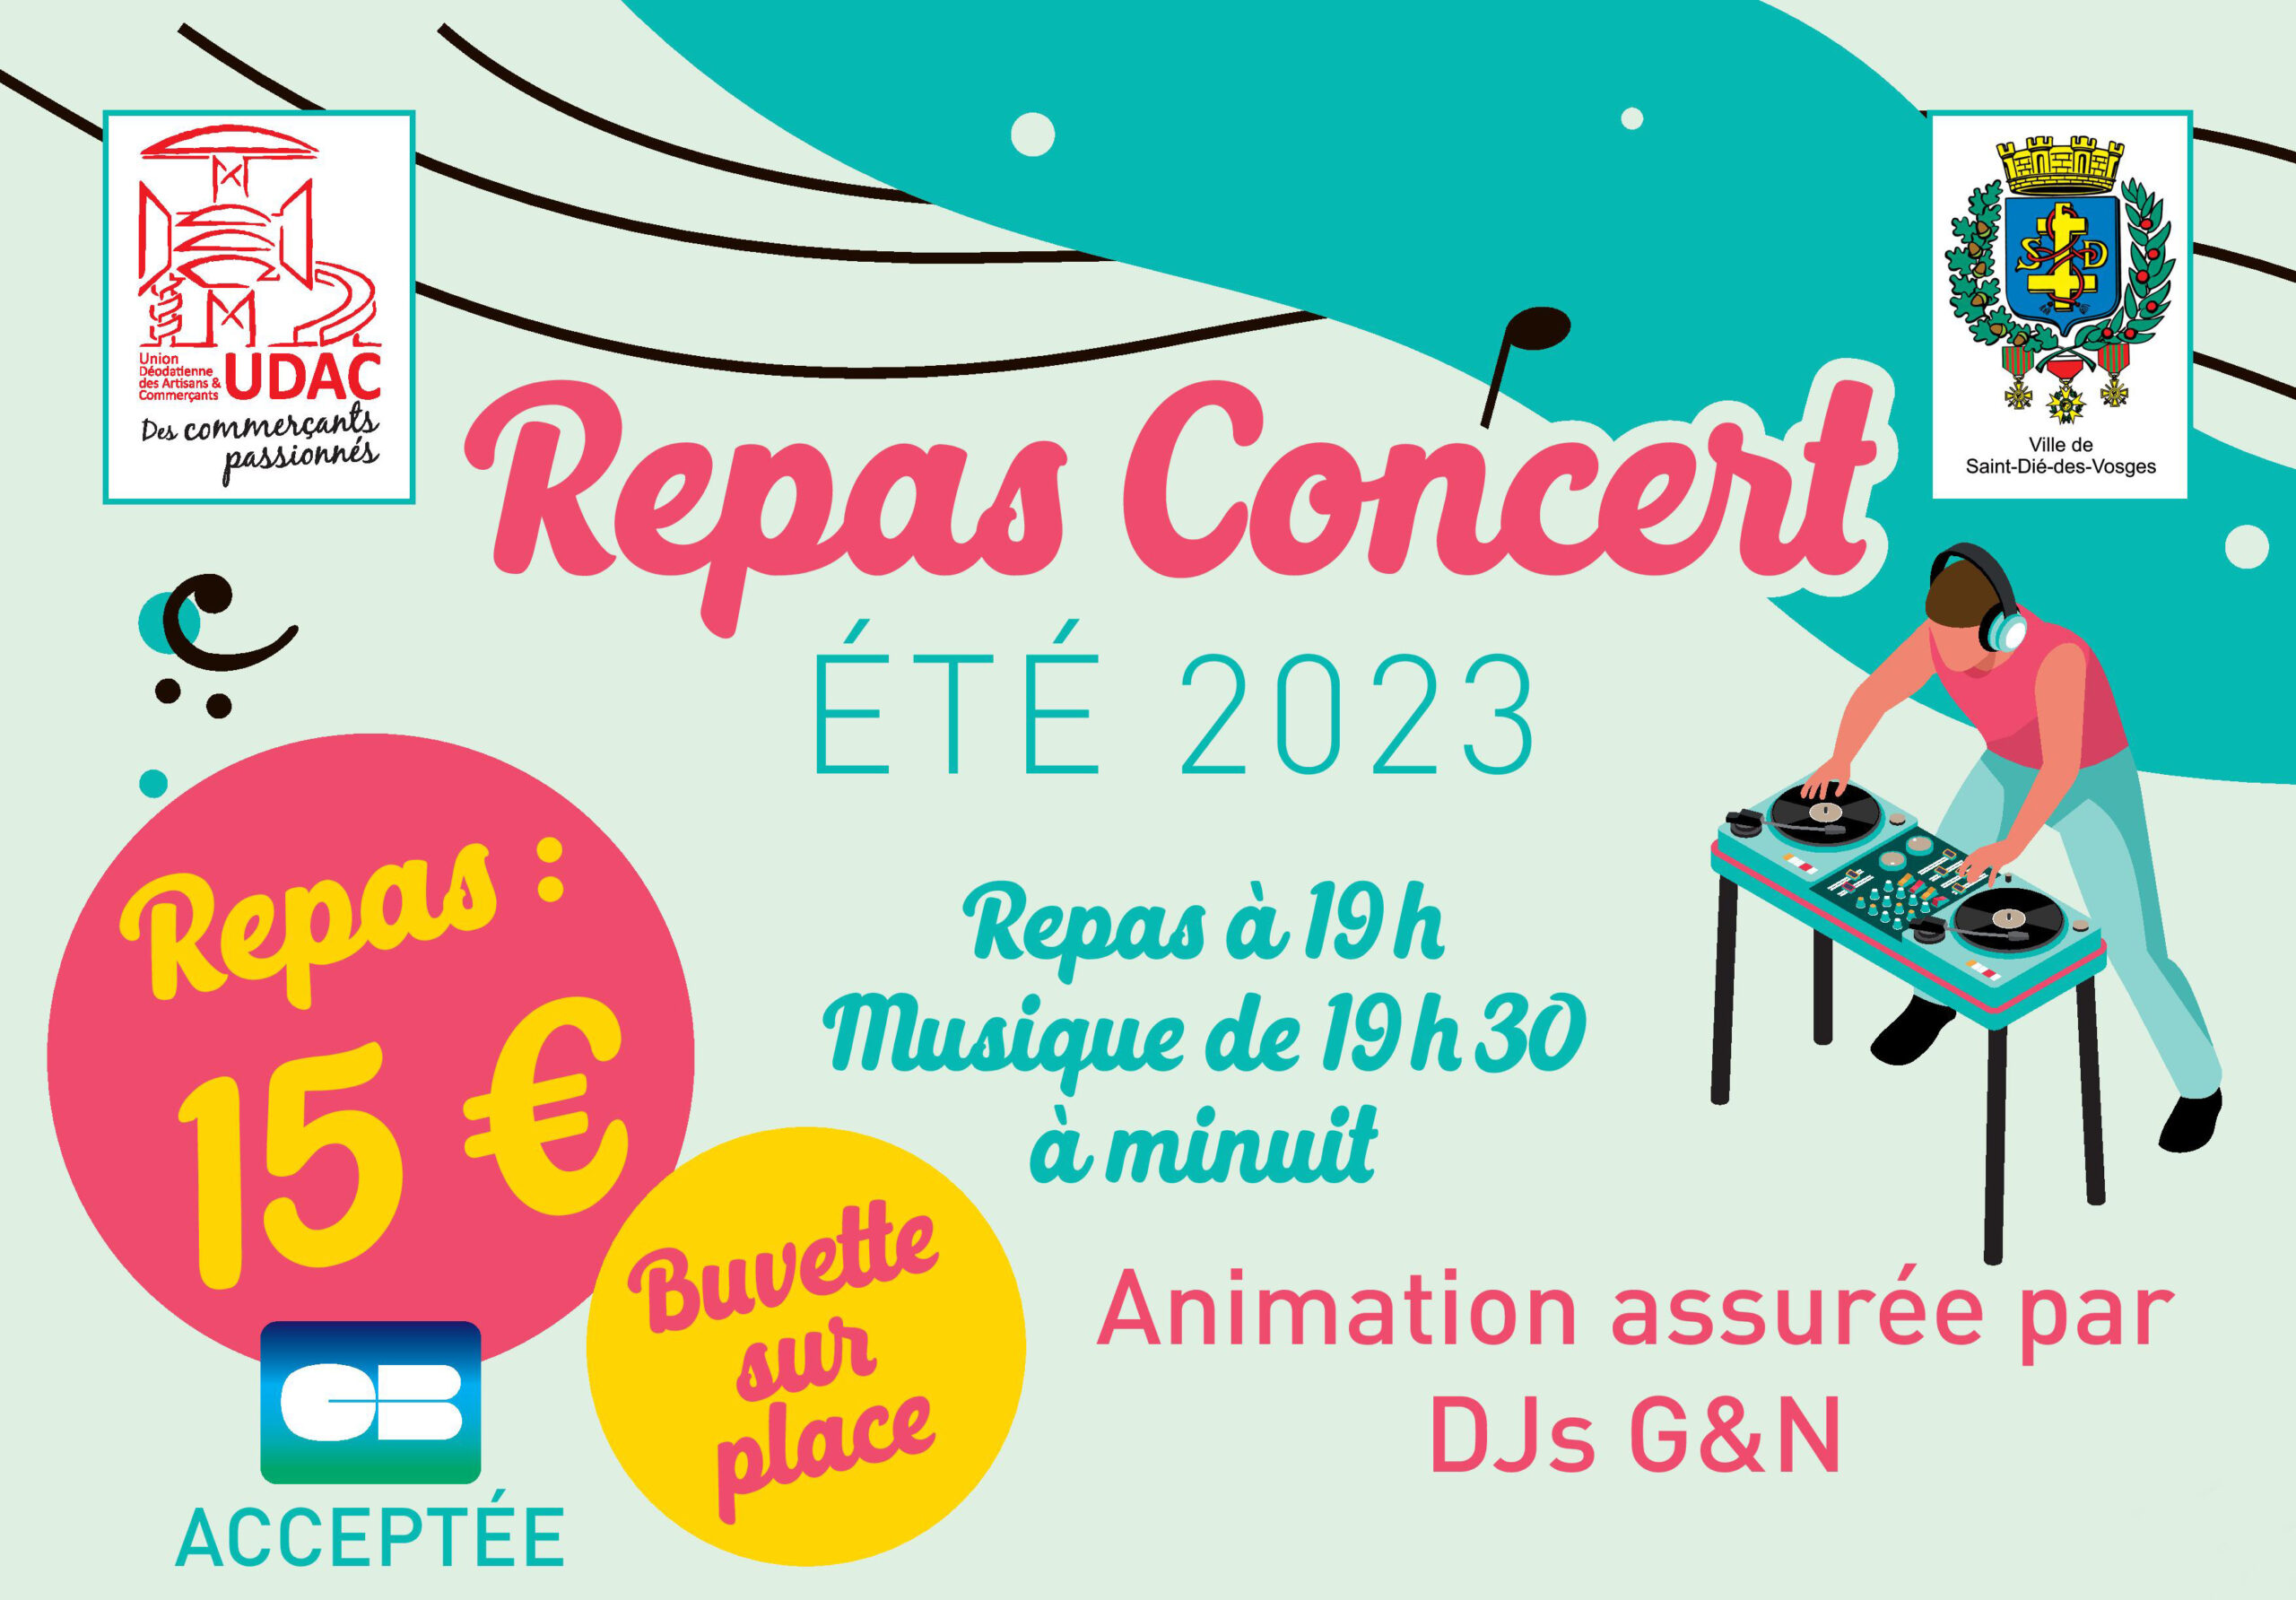 Repas-Concert_UDAC_01